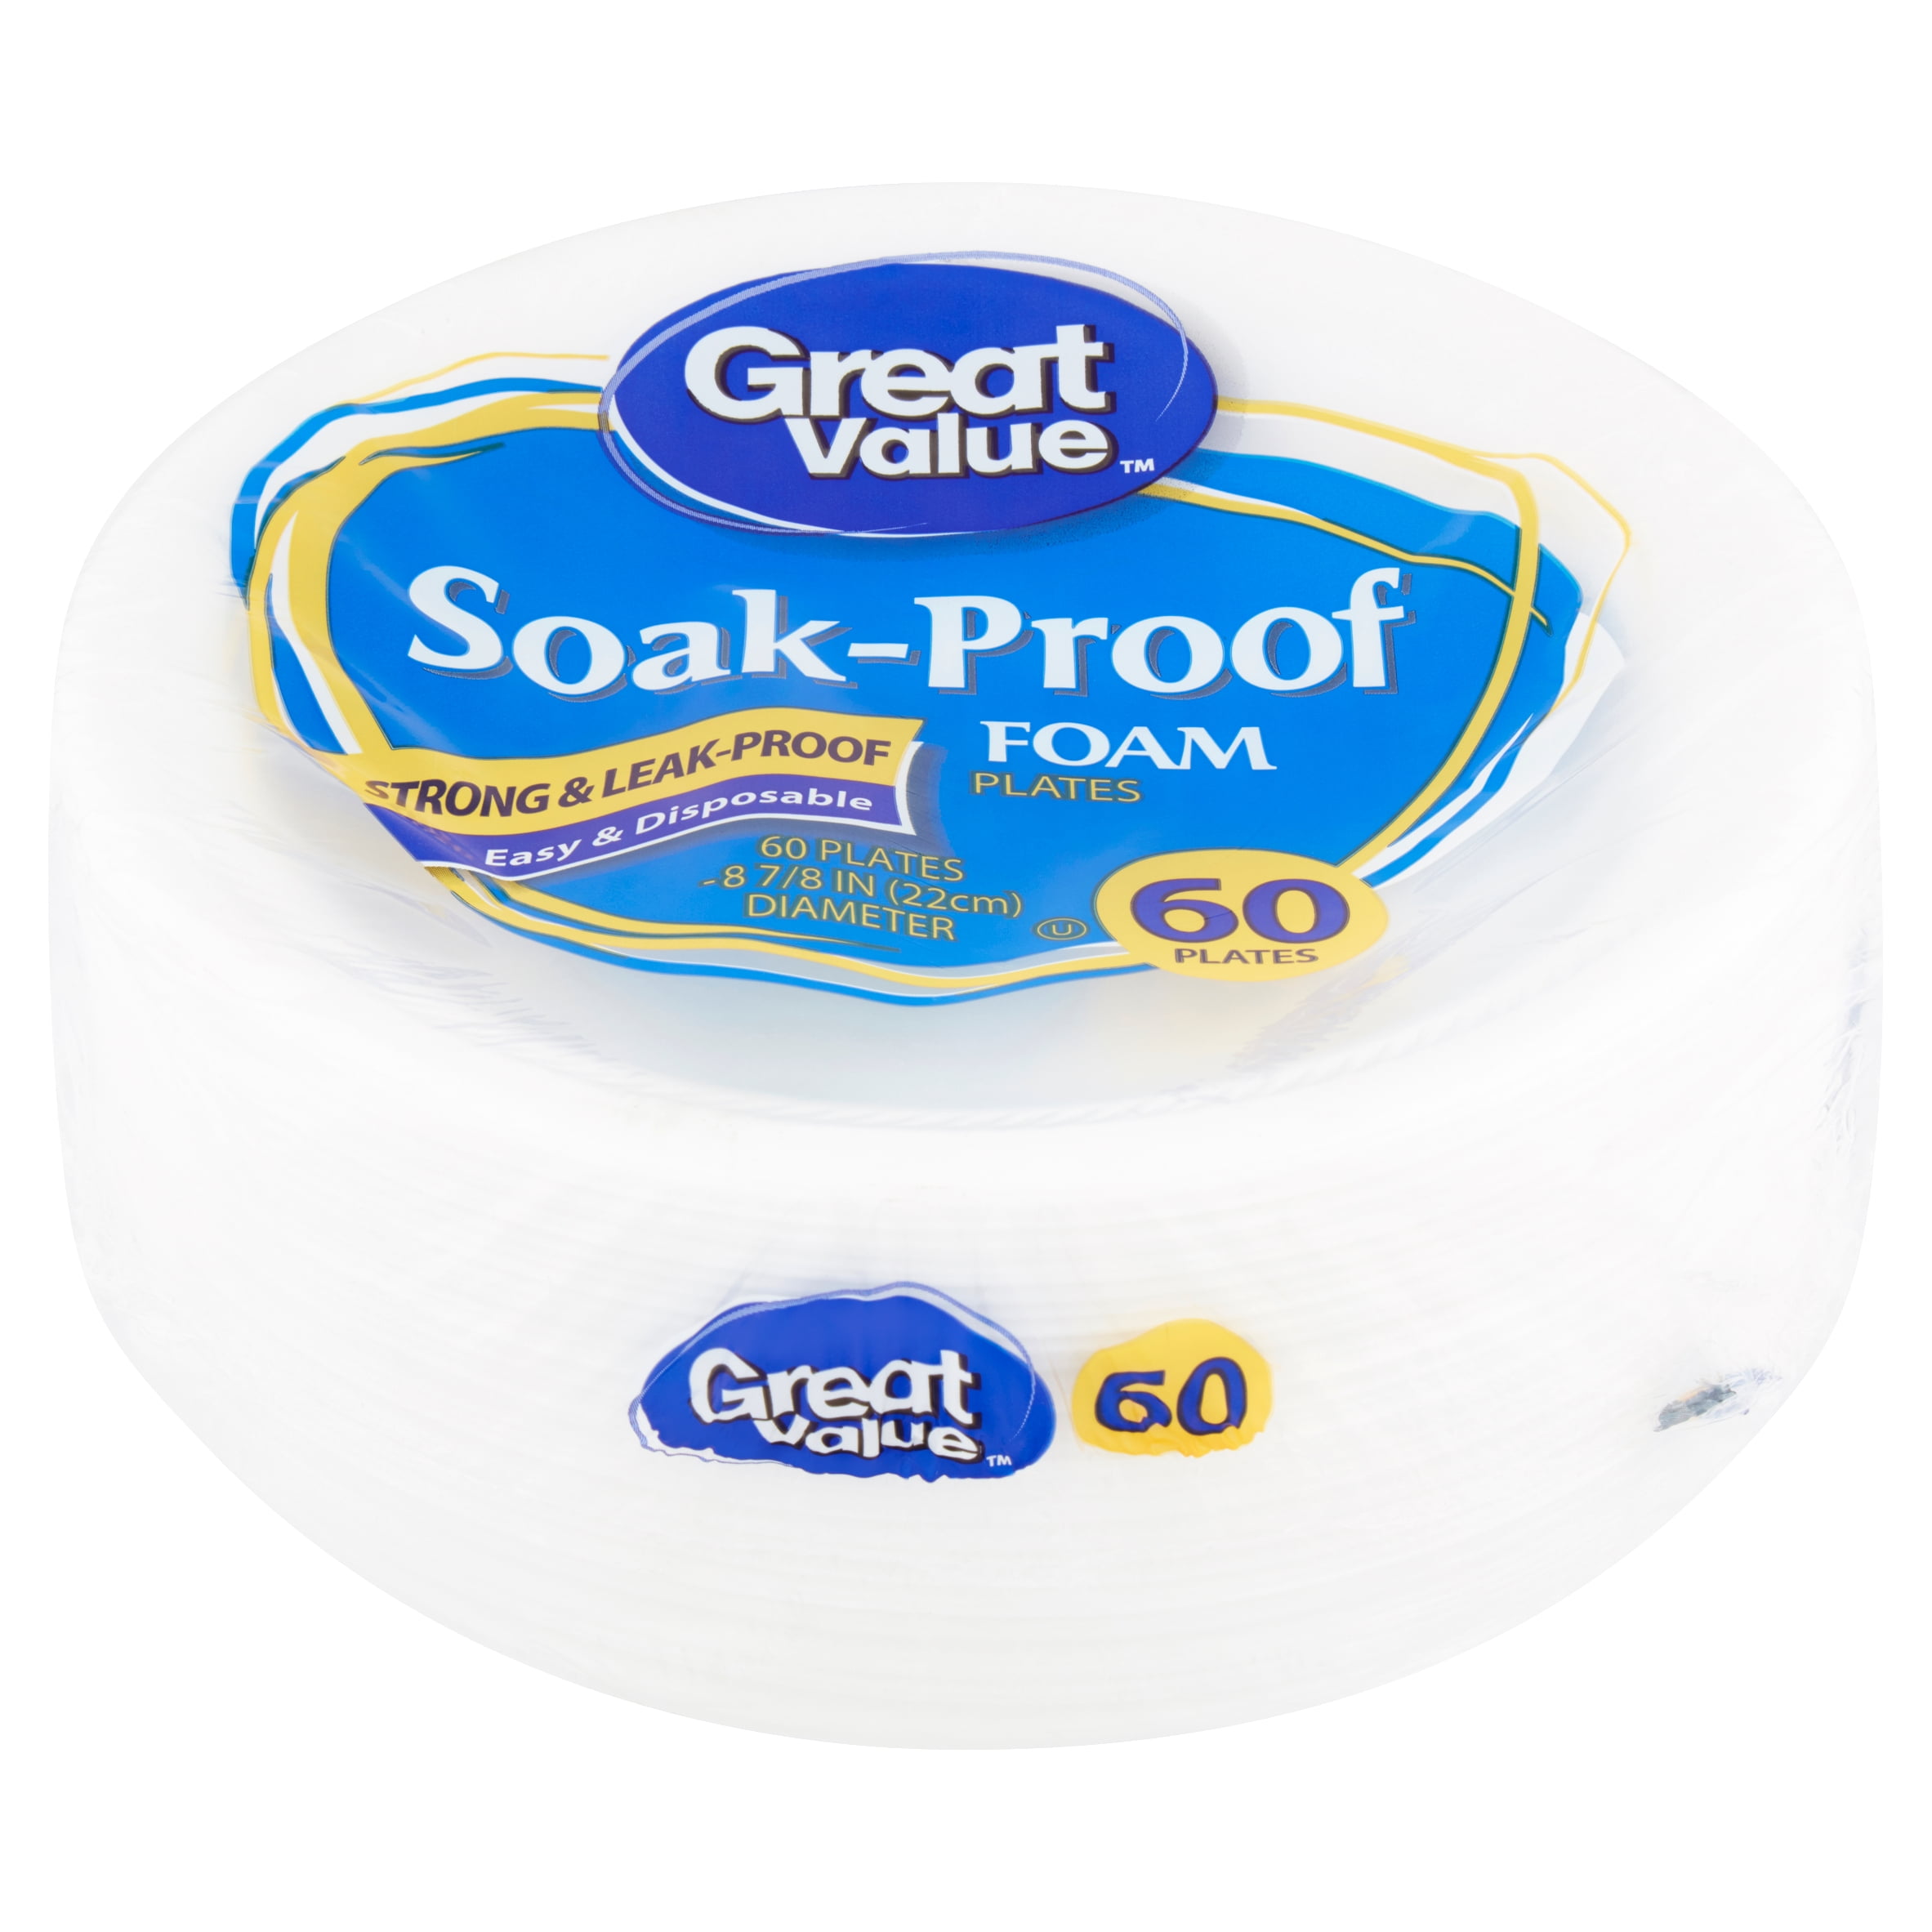 Quality - Soak-Proof foam plates - Plastic Ware